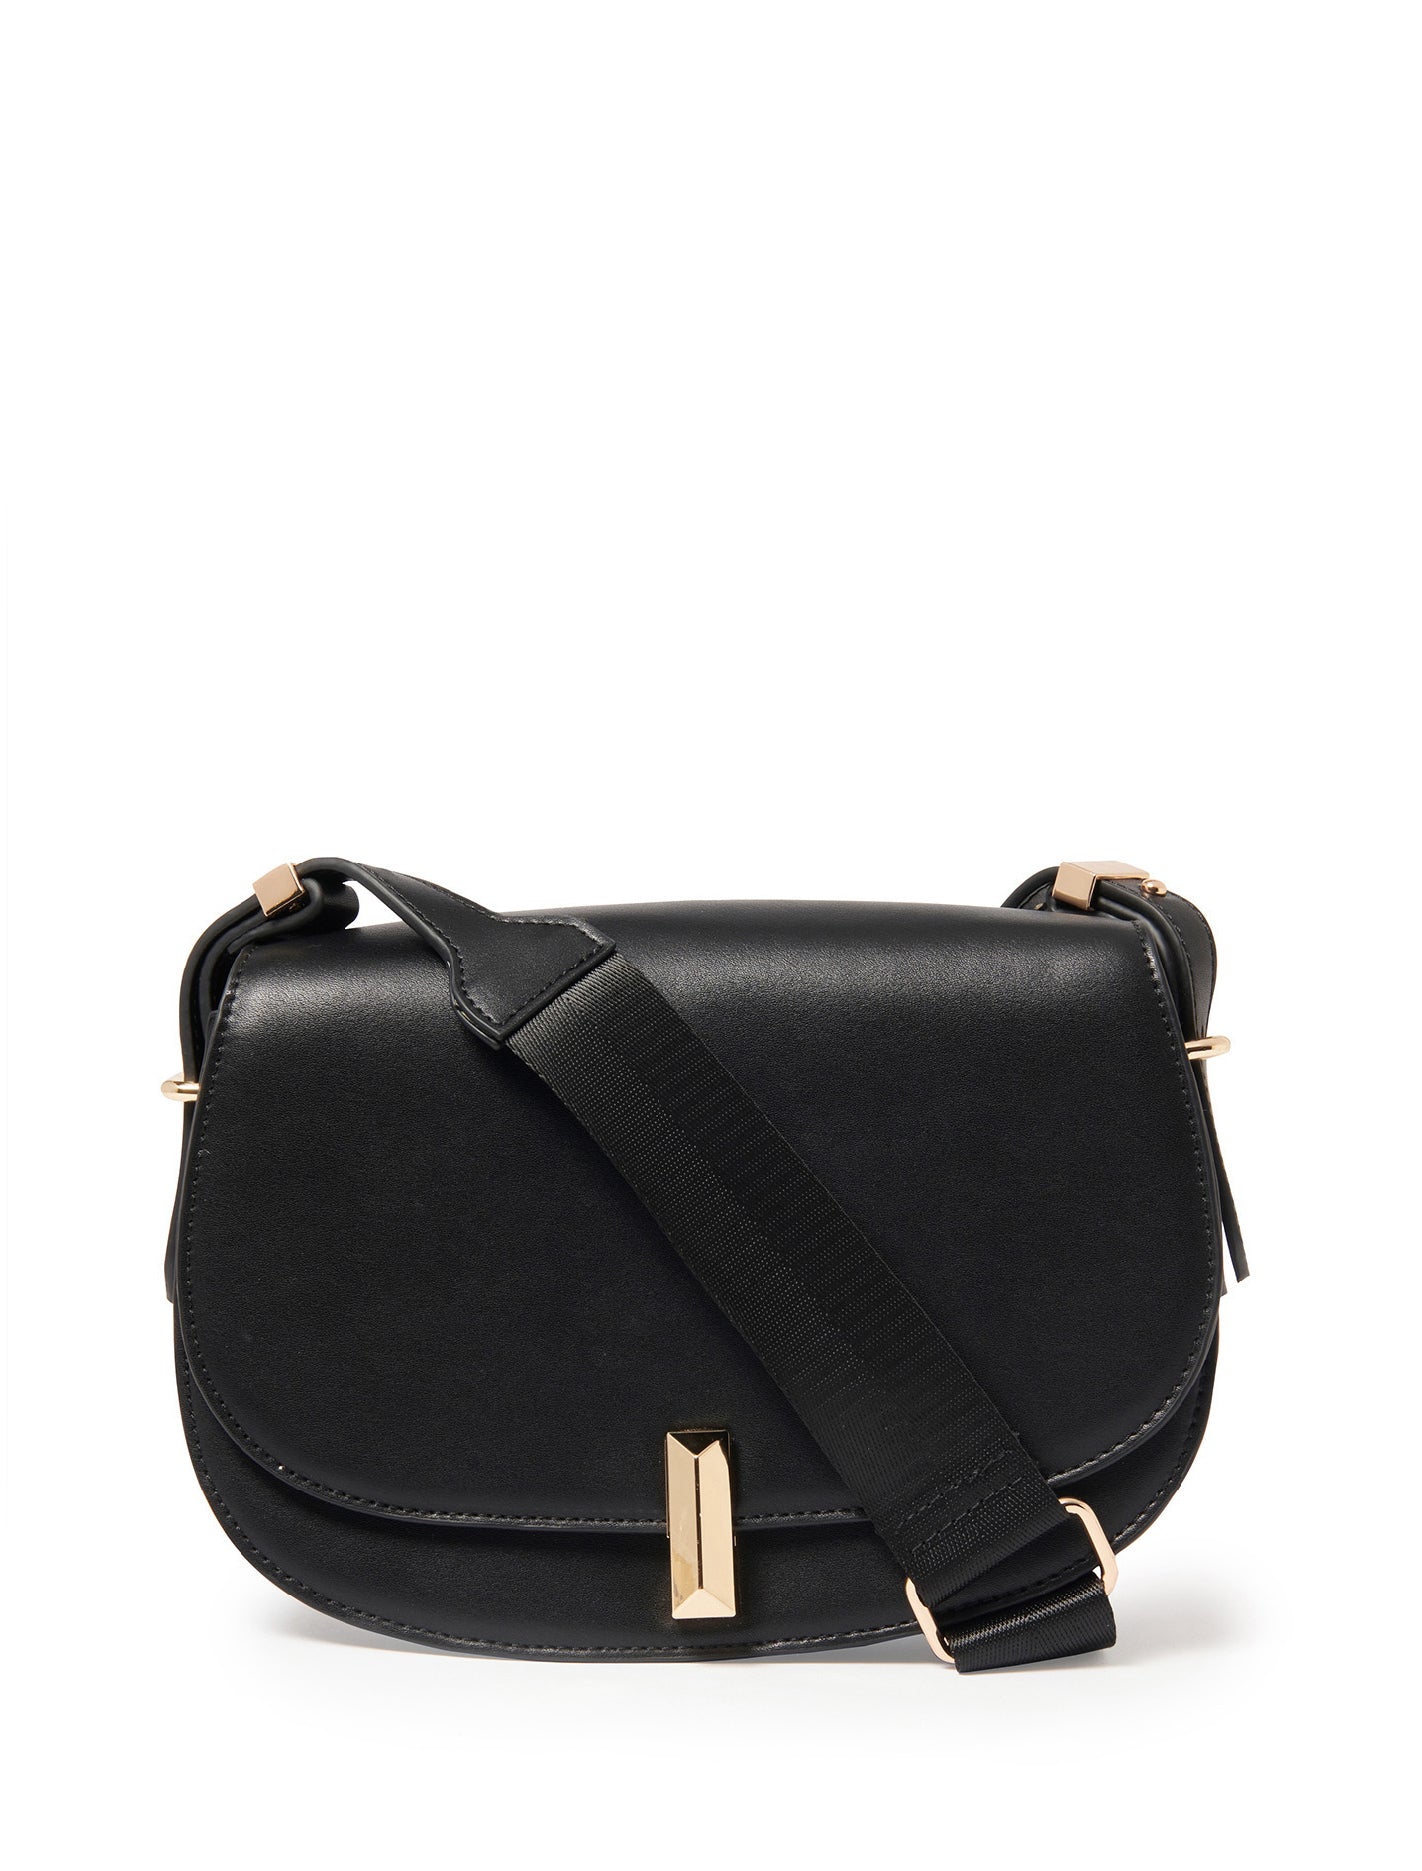 Forever New Bags | Shop Women's Handbags Online